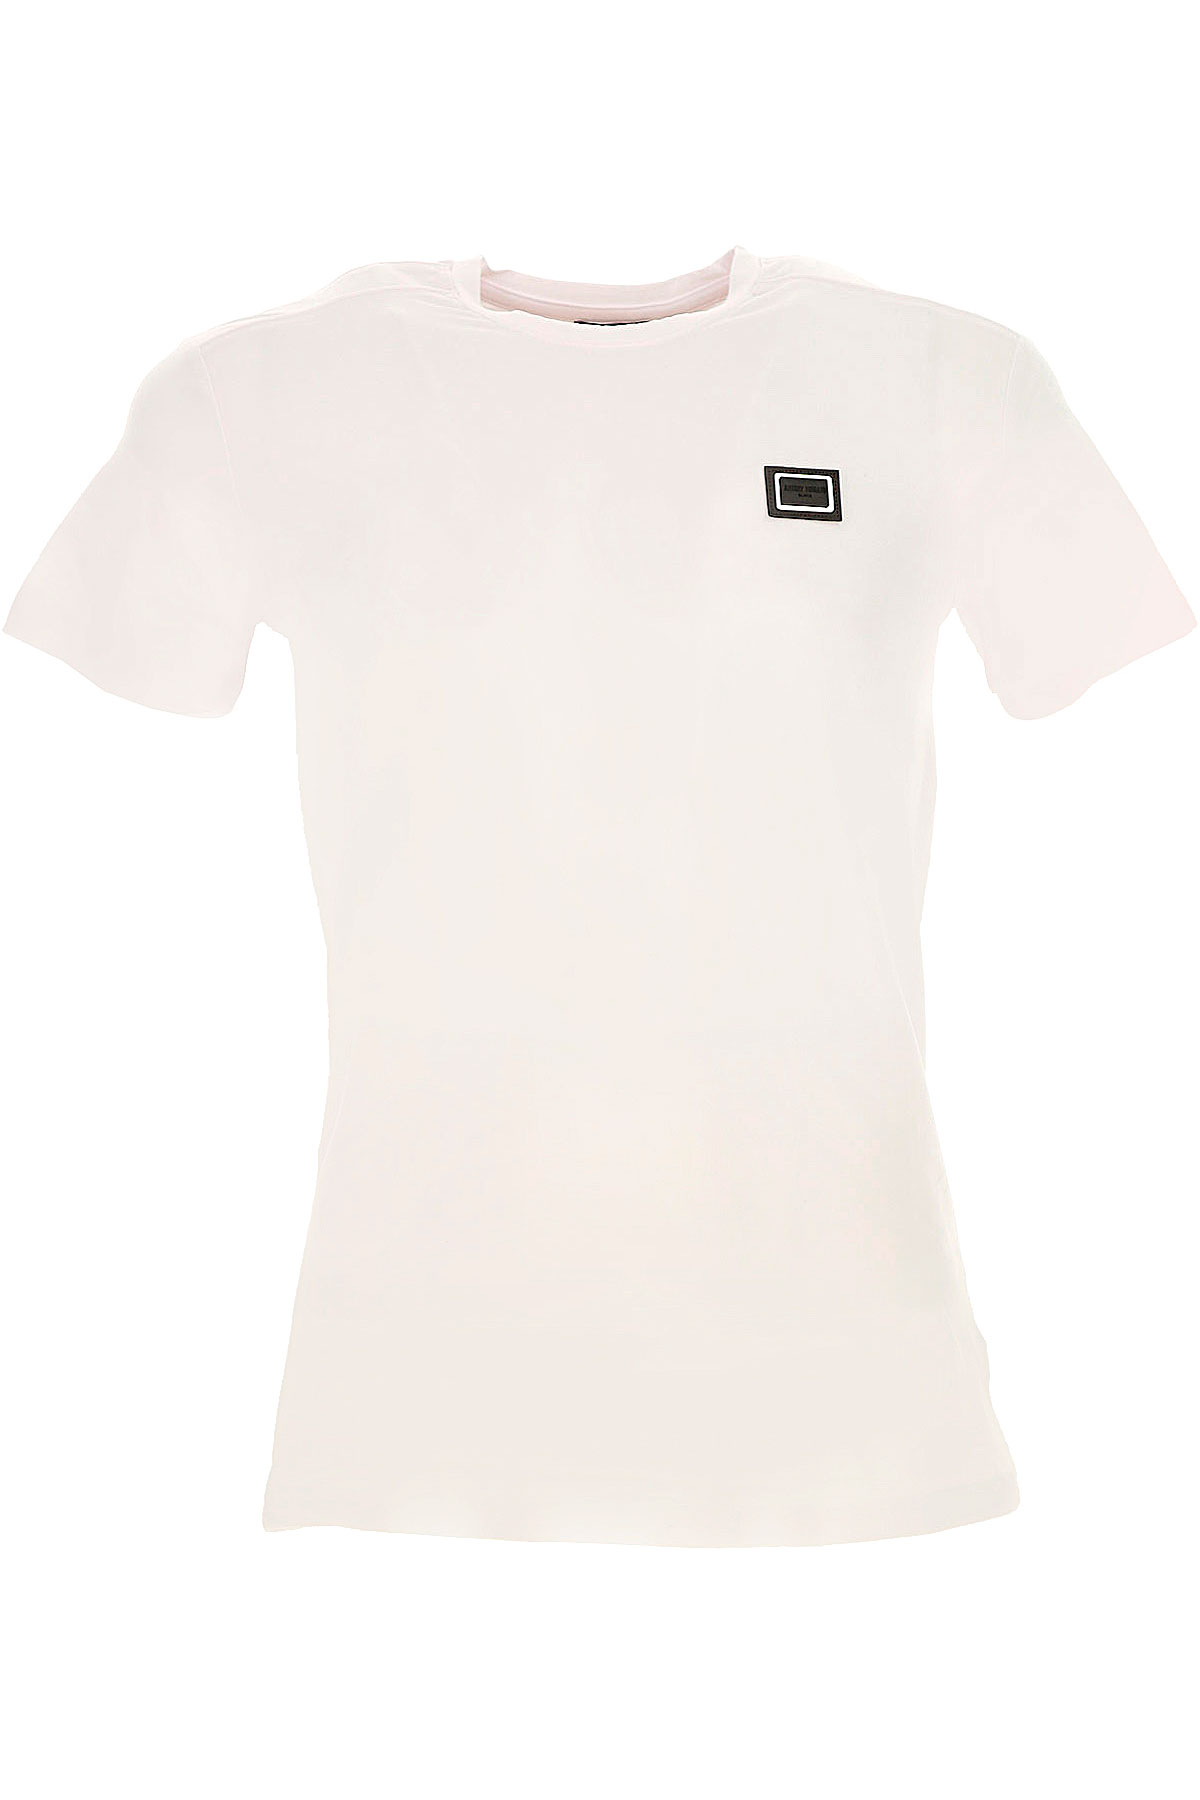 Antony Morato T-shirt Homme, Blanc, Coton, 2017, L M S XL XXL